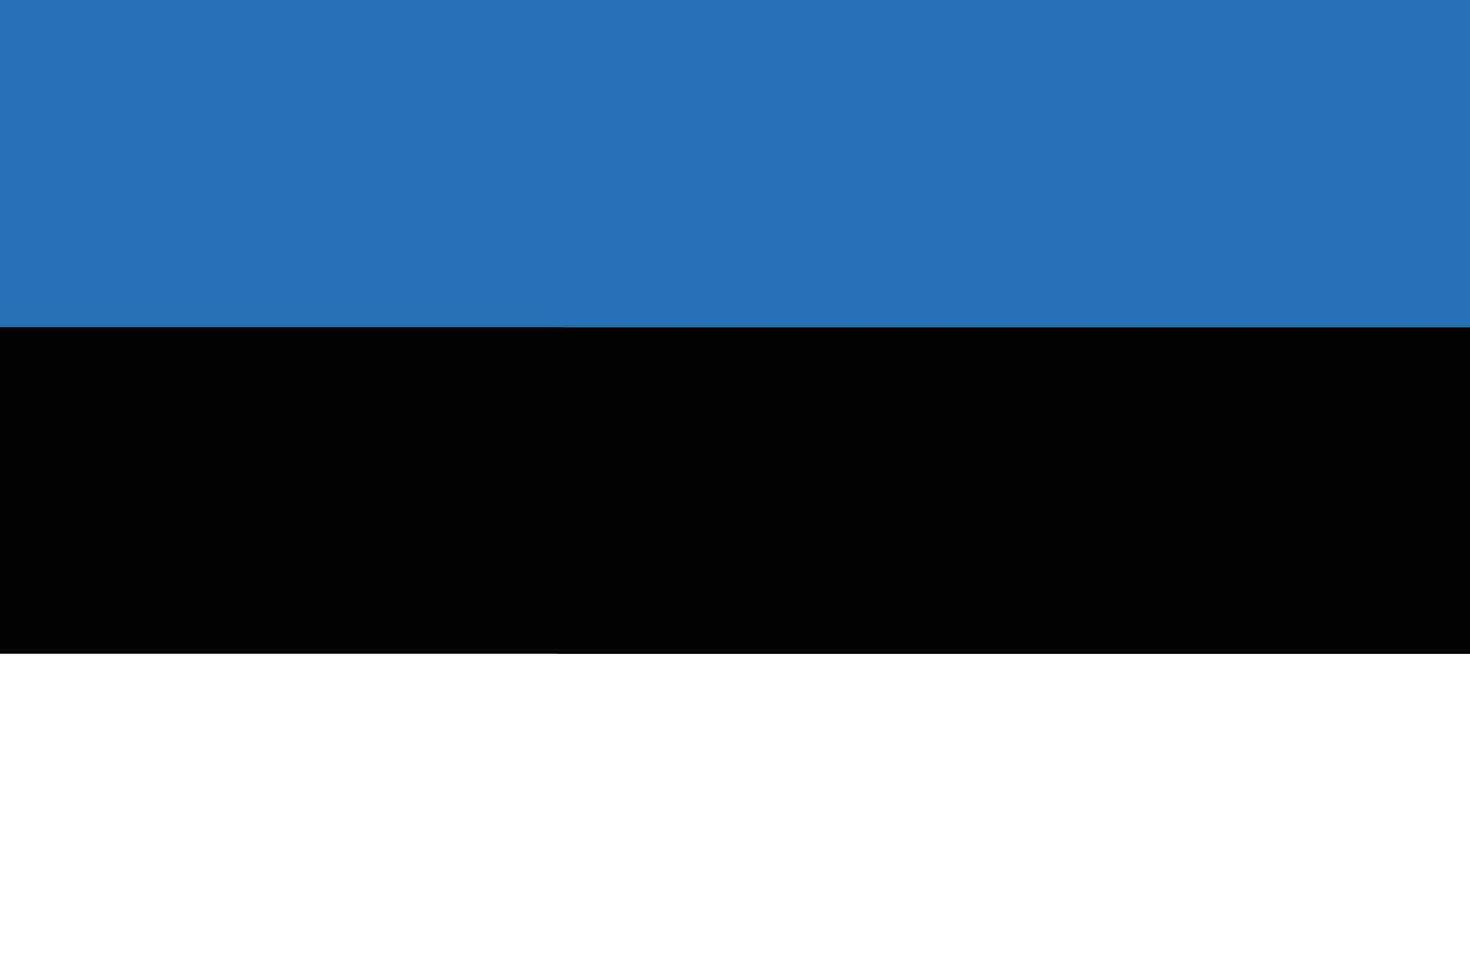 Flag of Estonia shape. Estonia flag design shape vector